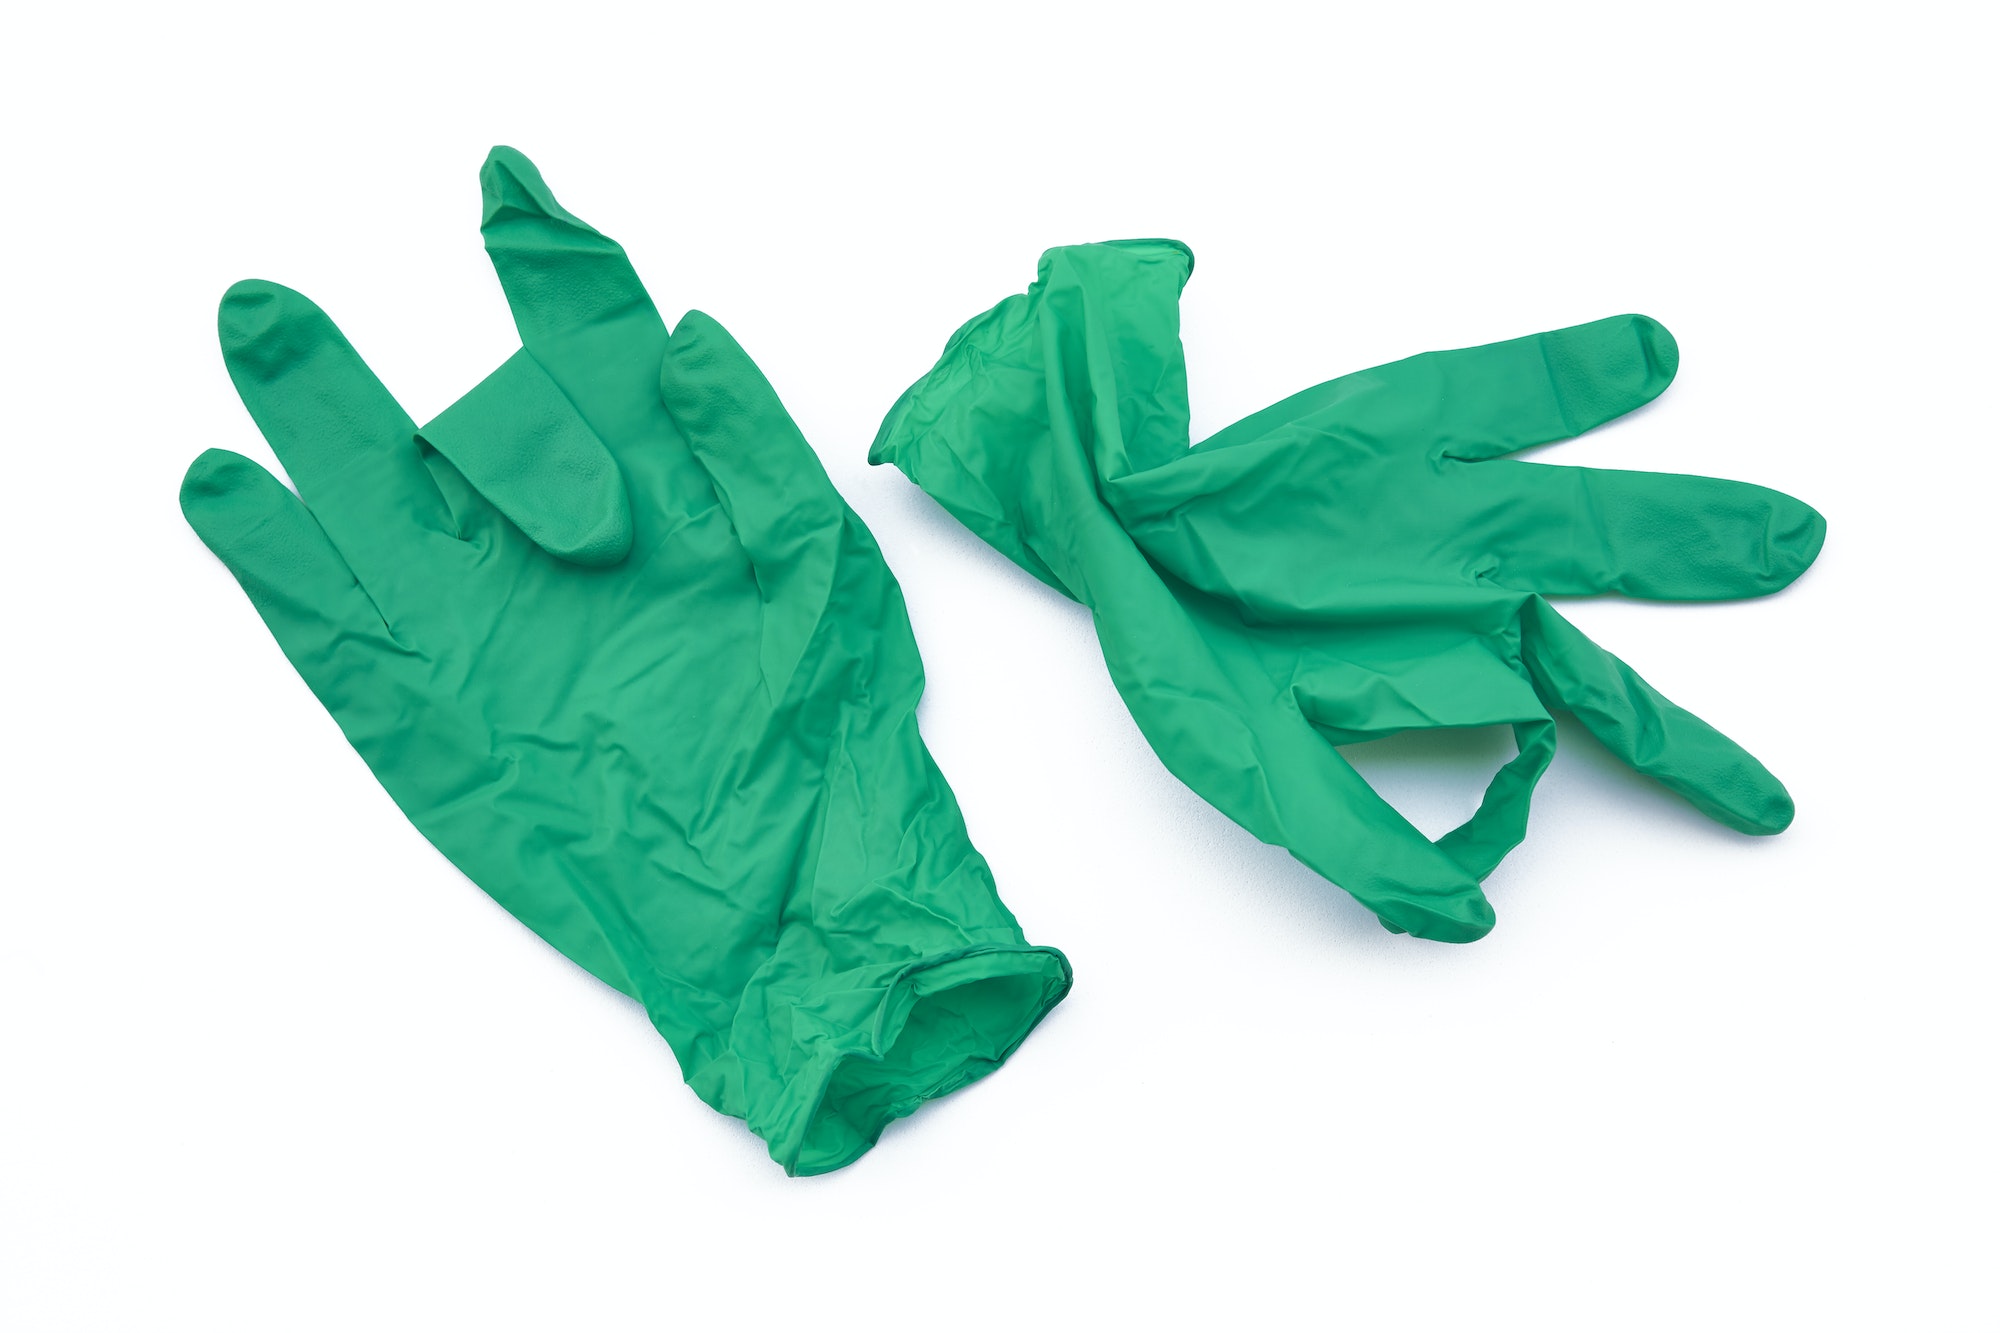 Covid-19 disposable contaminated gloves. Coronavirus latex plastic rubbish